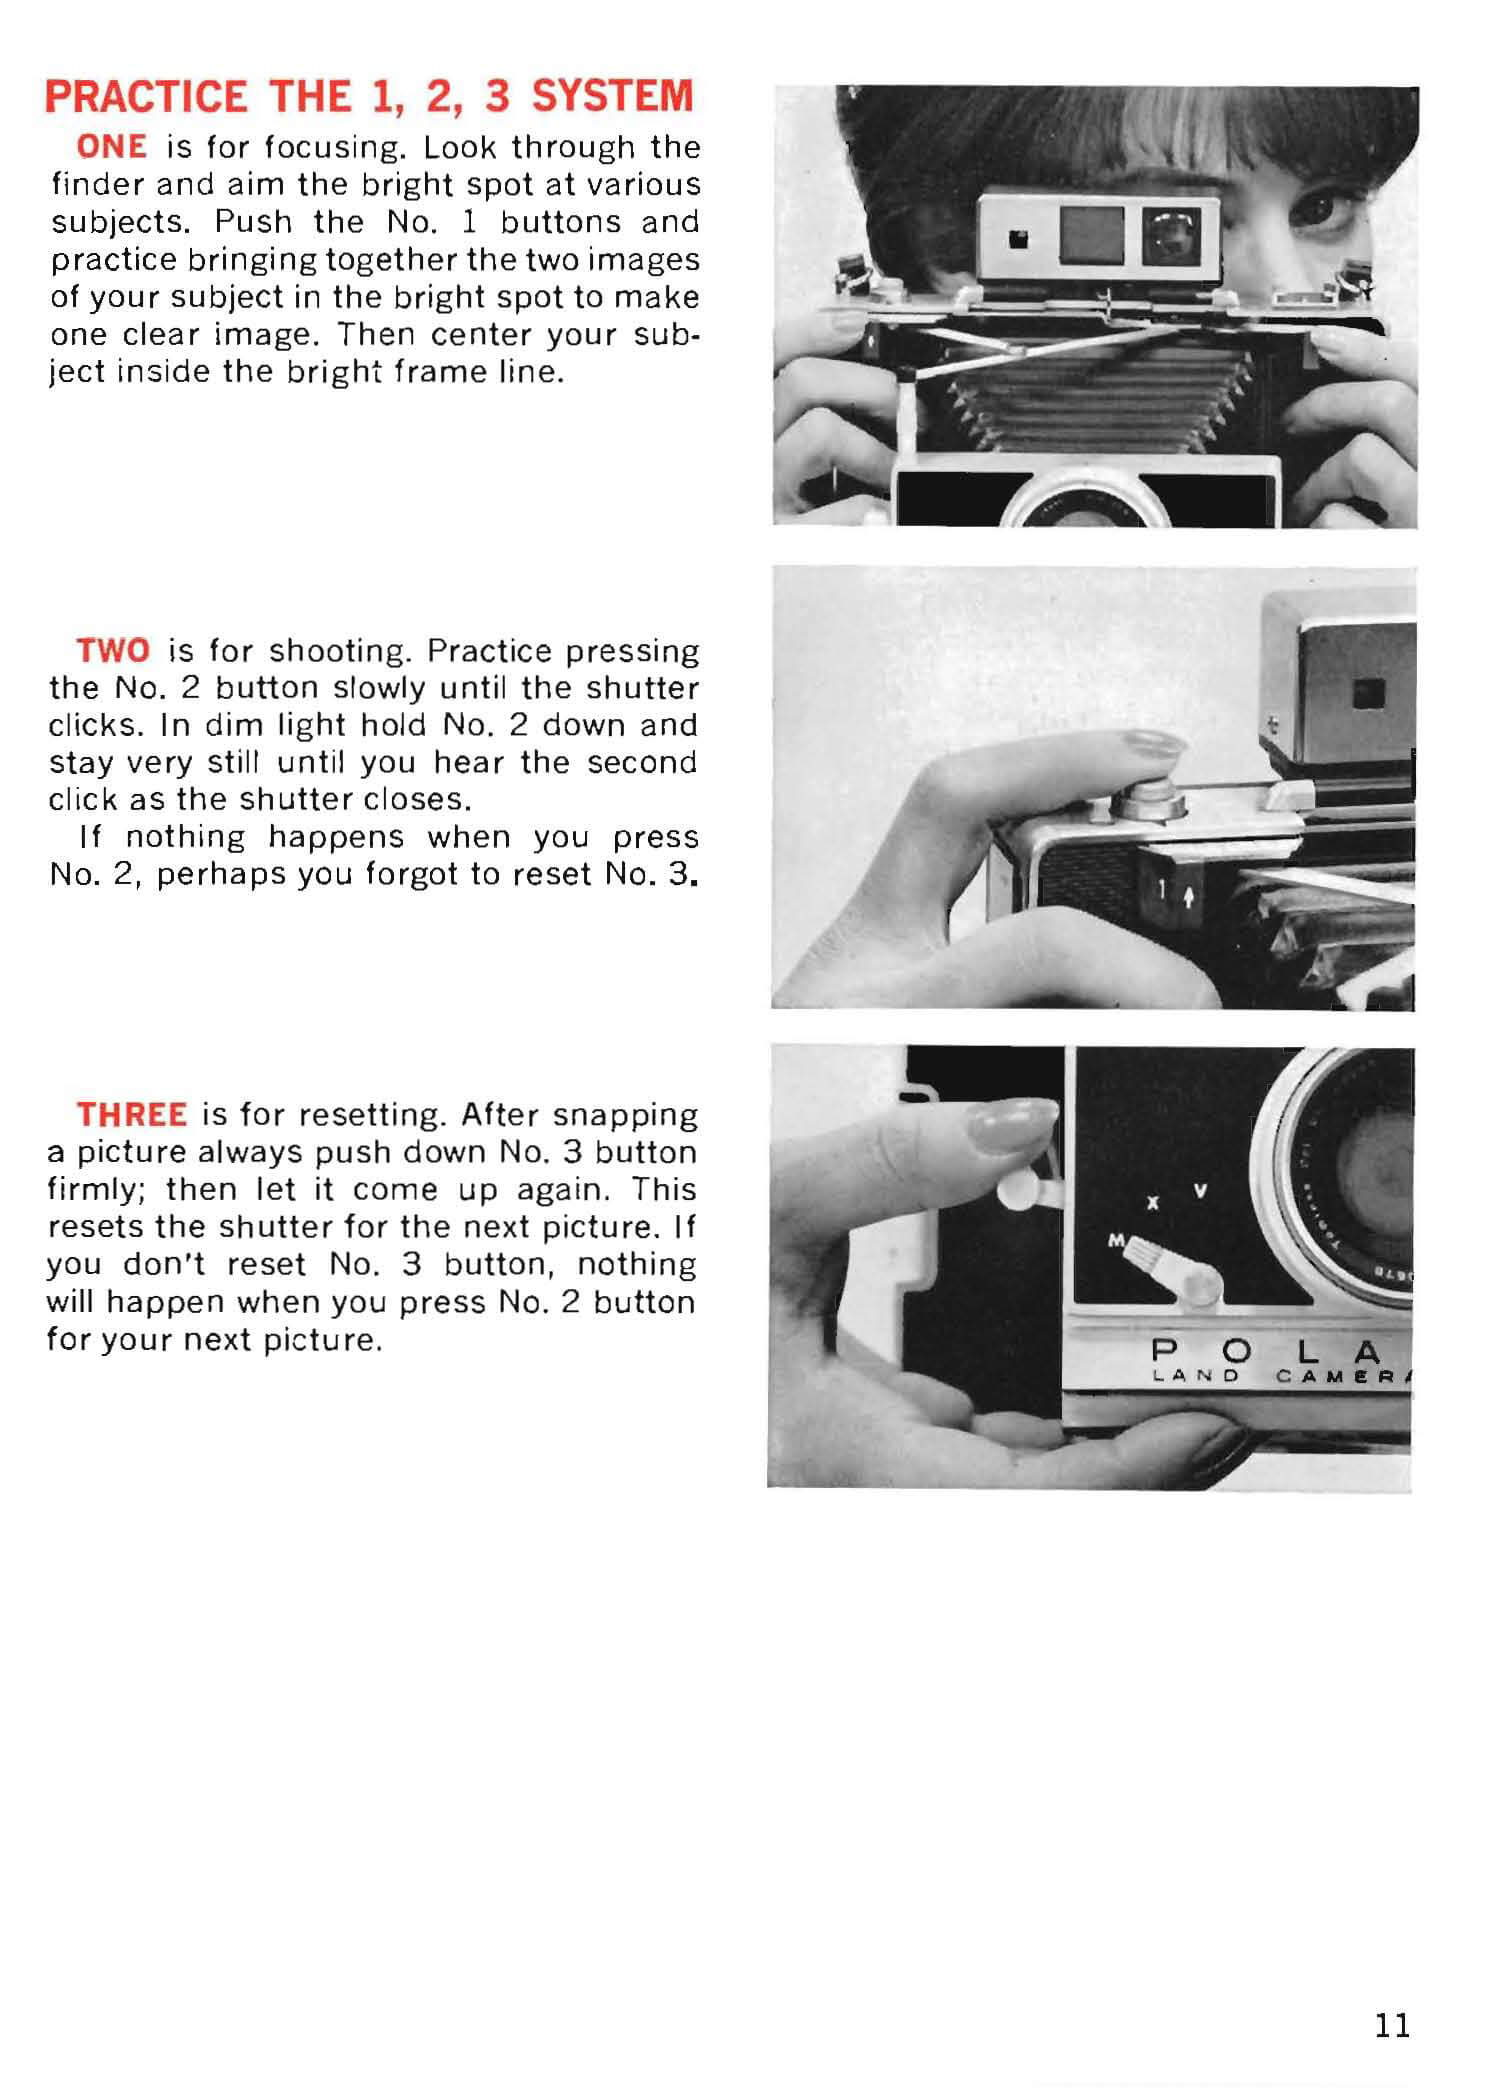 Polaroid_180_Manual_p11